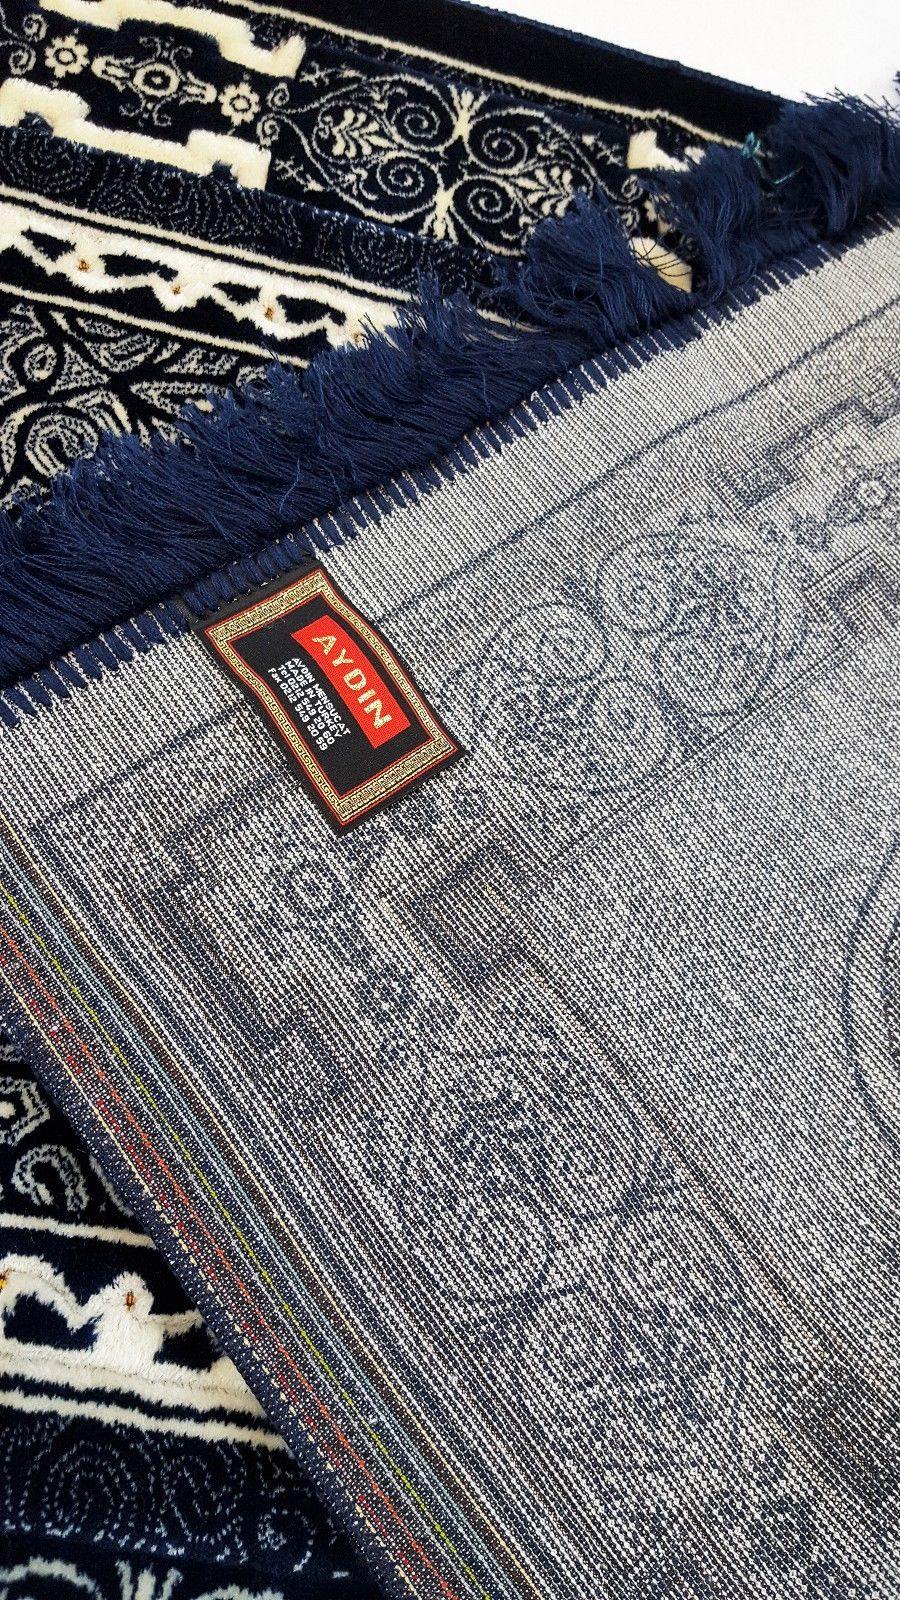 Turkish Luxury Velvet Islamic Prayer Rug Namaz Carpet 110x70cm 800g (1.8lbs) - Arabian Shopping Zone